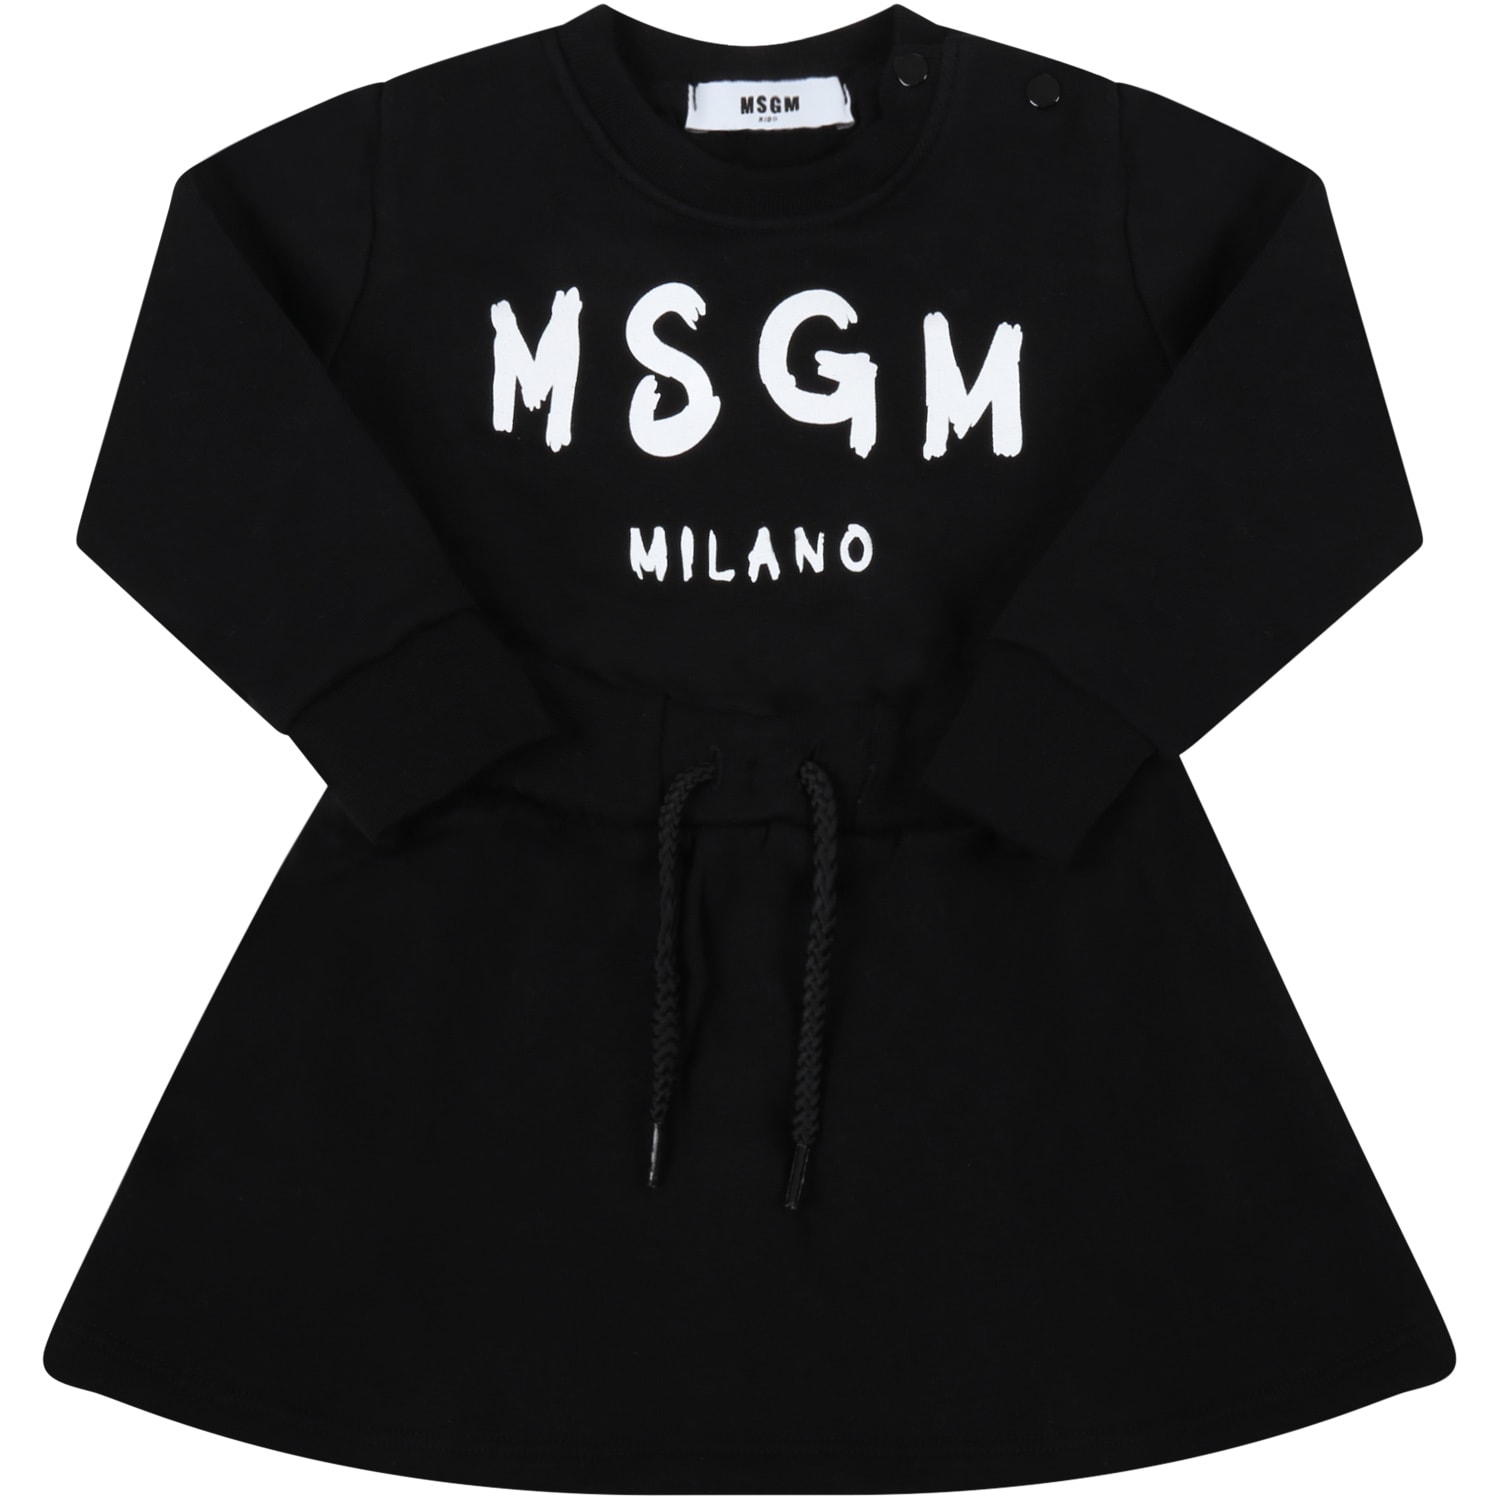 MSGM Black Dress For Baby Girl With White Logo